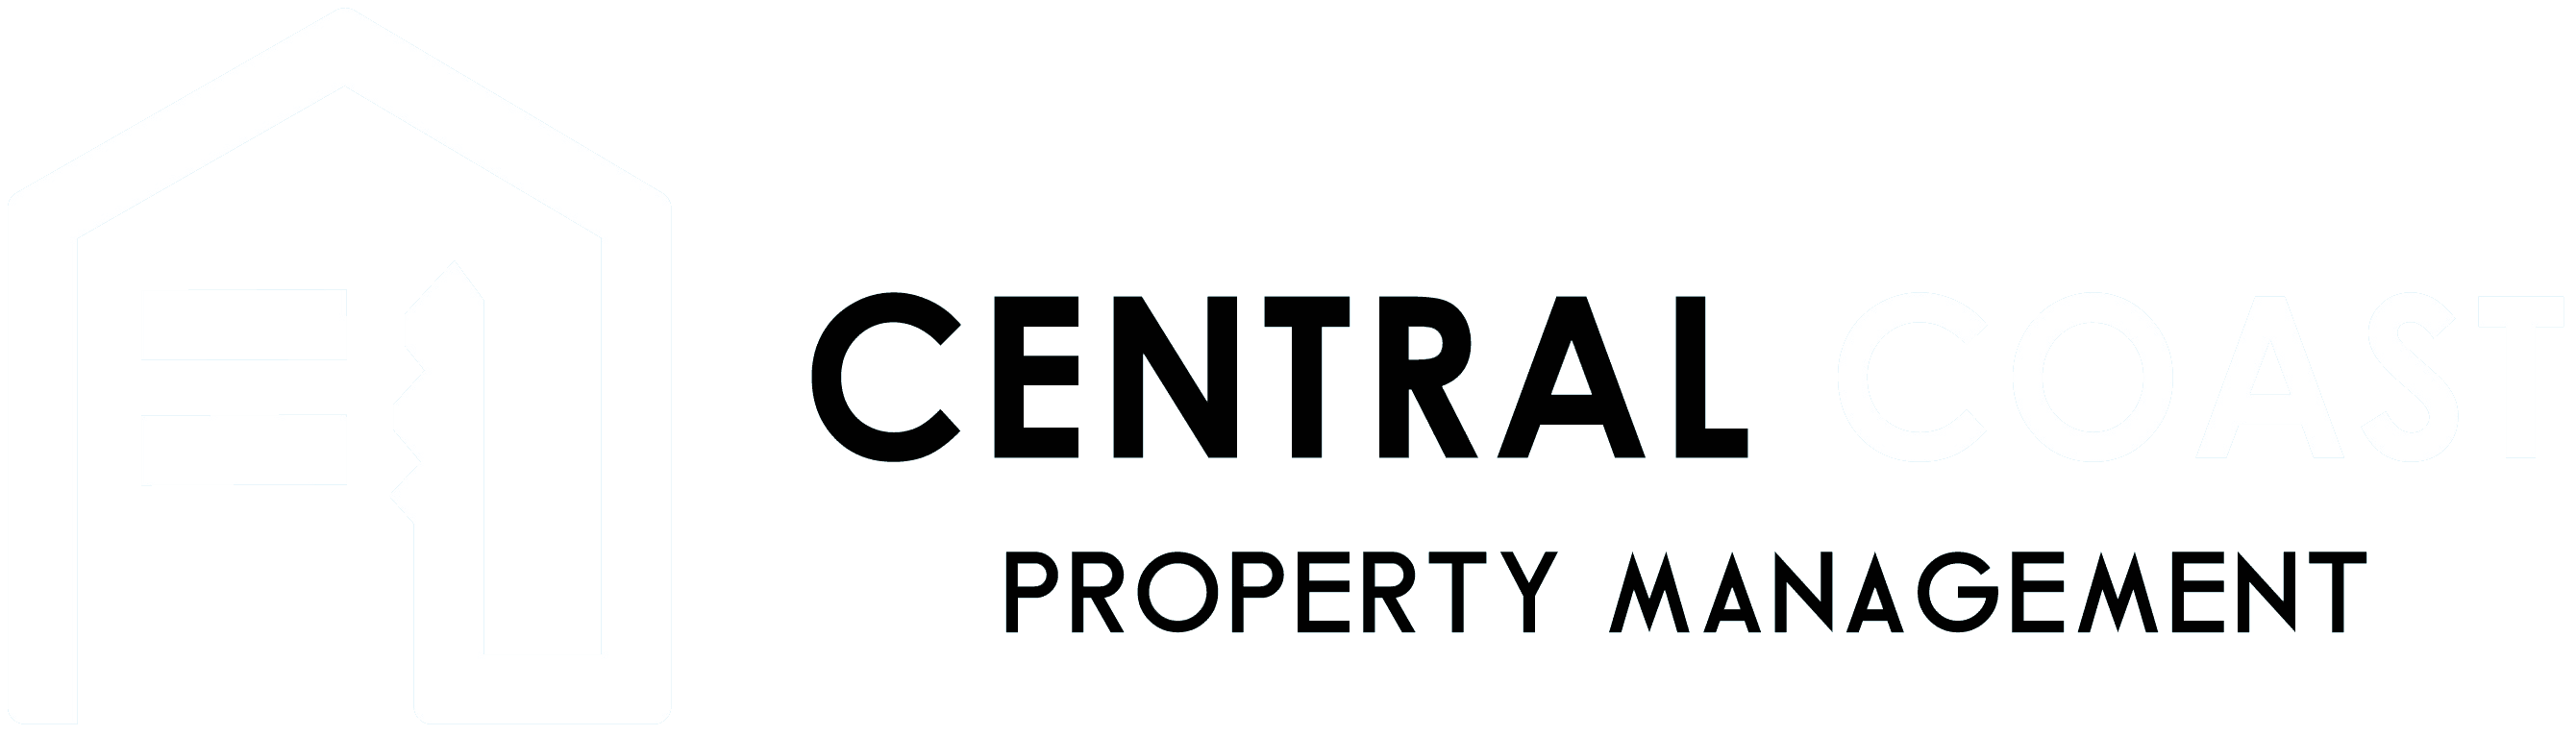 Central Coast Property Management